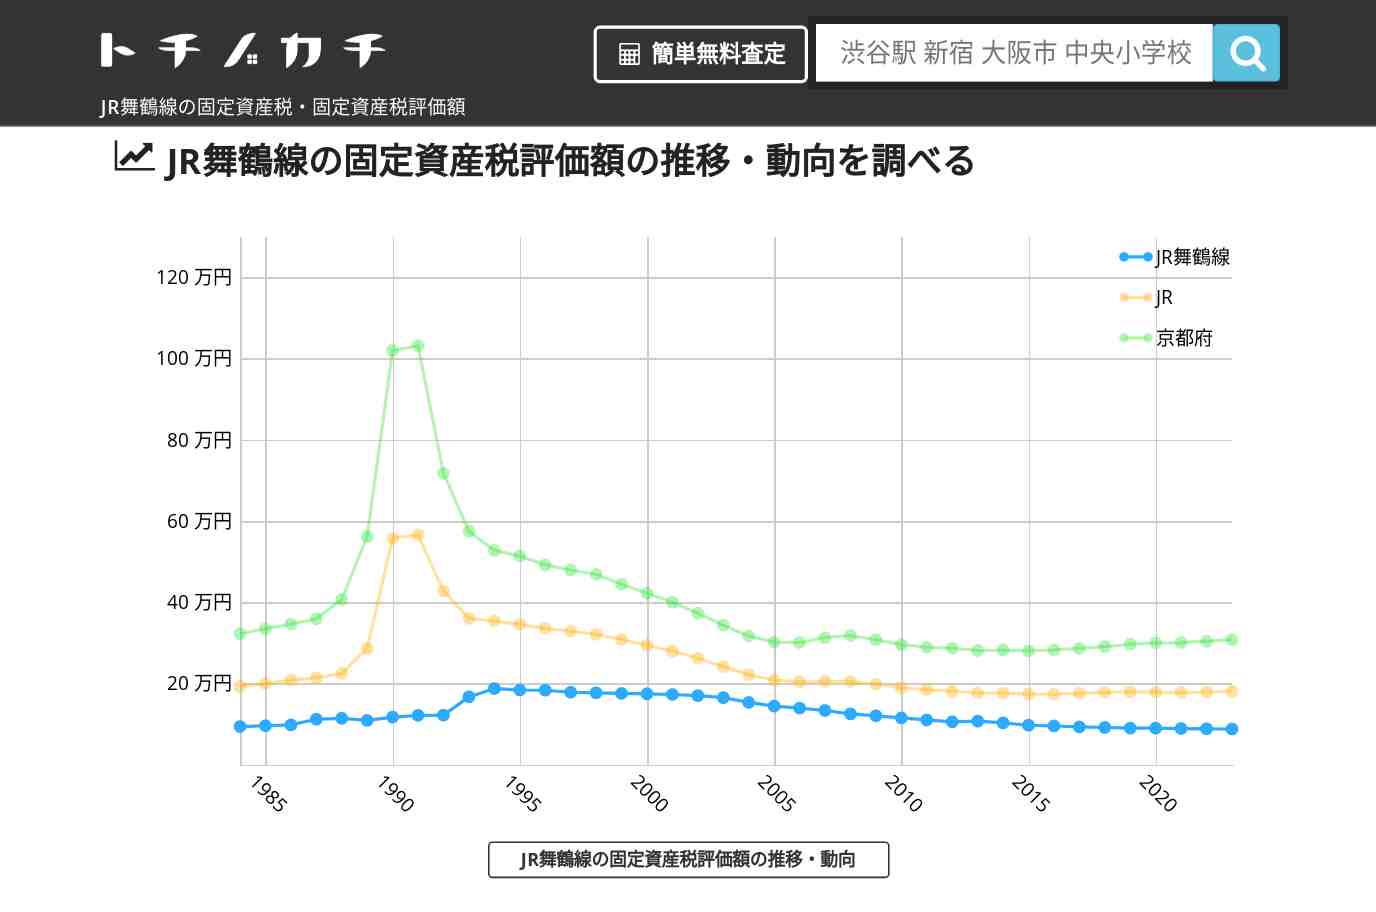 JR舞鶴線(JR)の固定資産税・固定資産税評価額 | トチノカチ